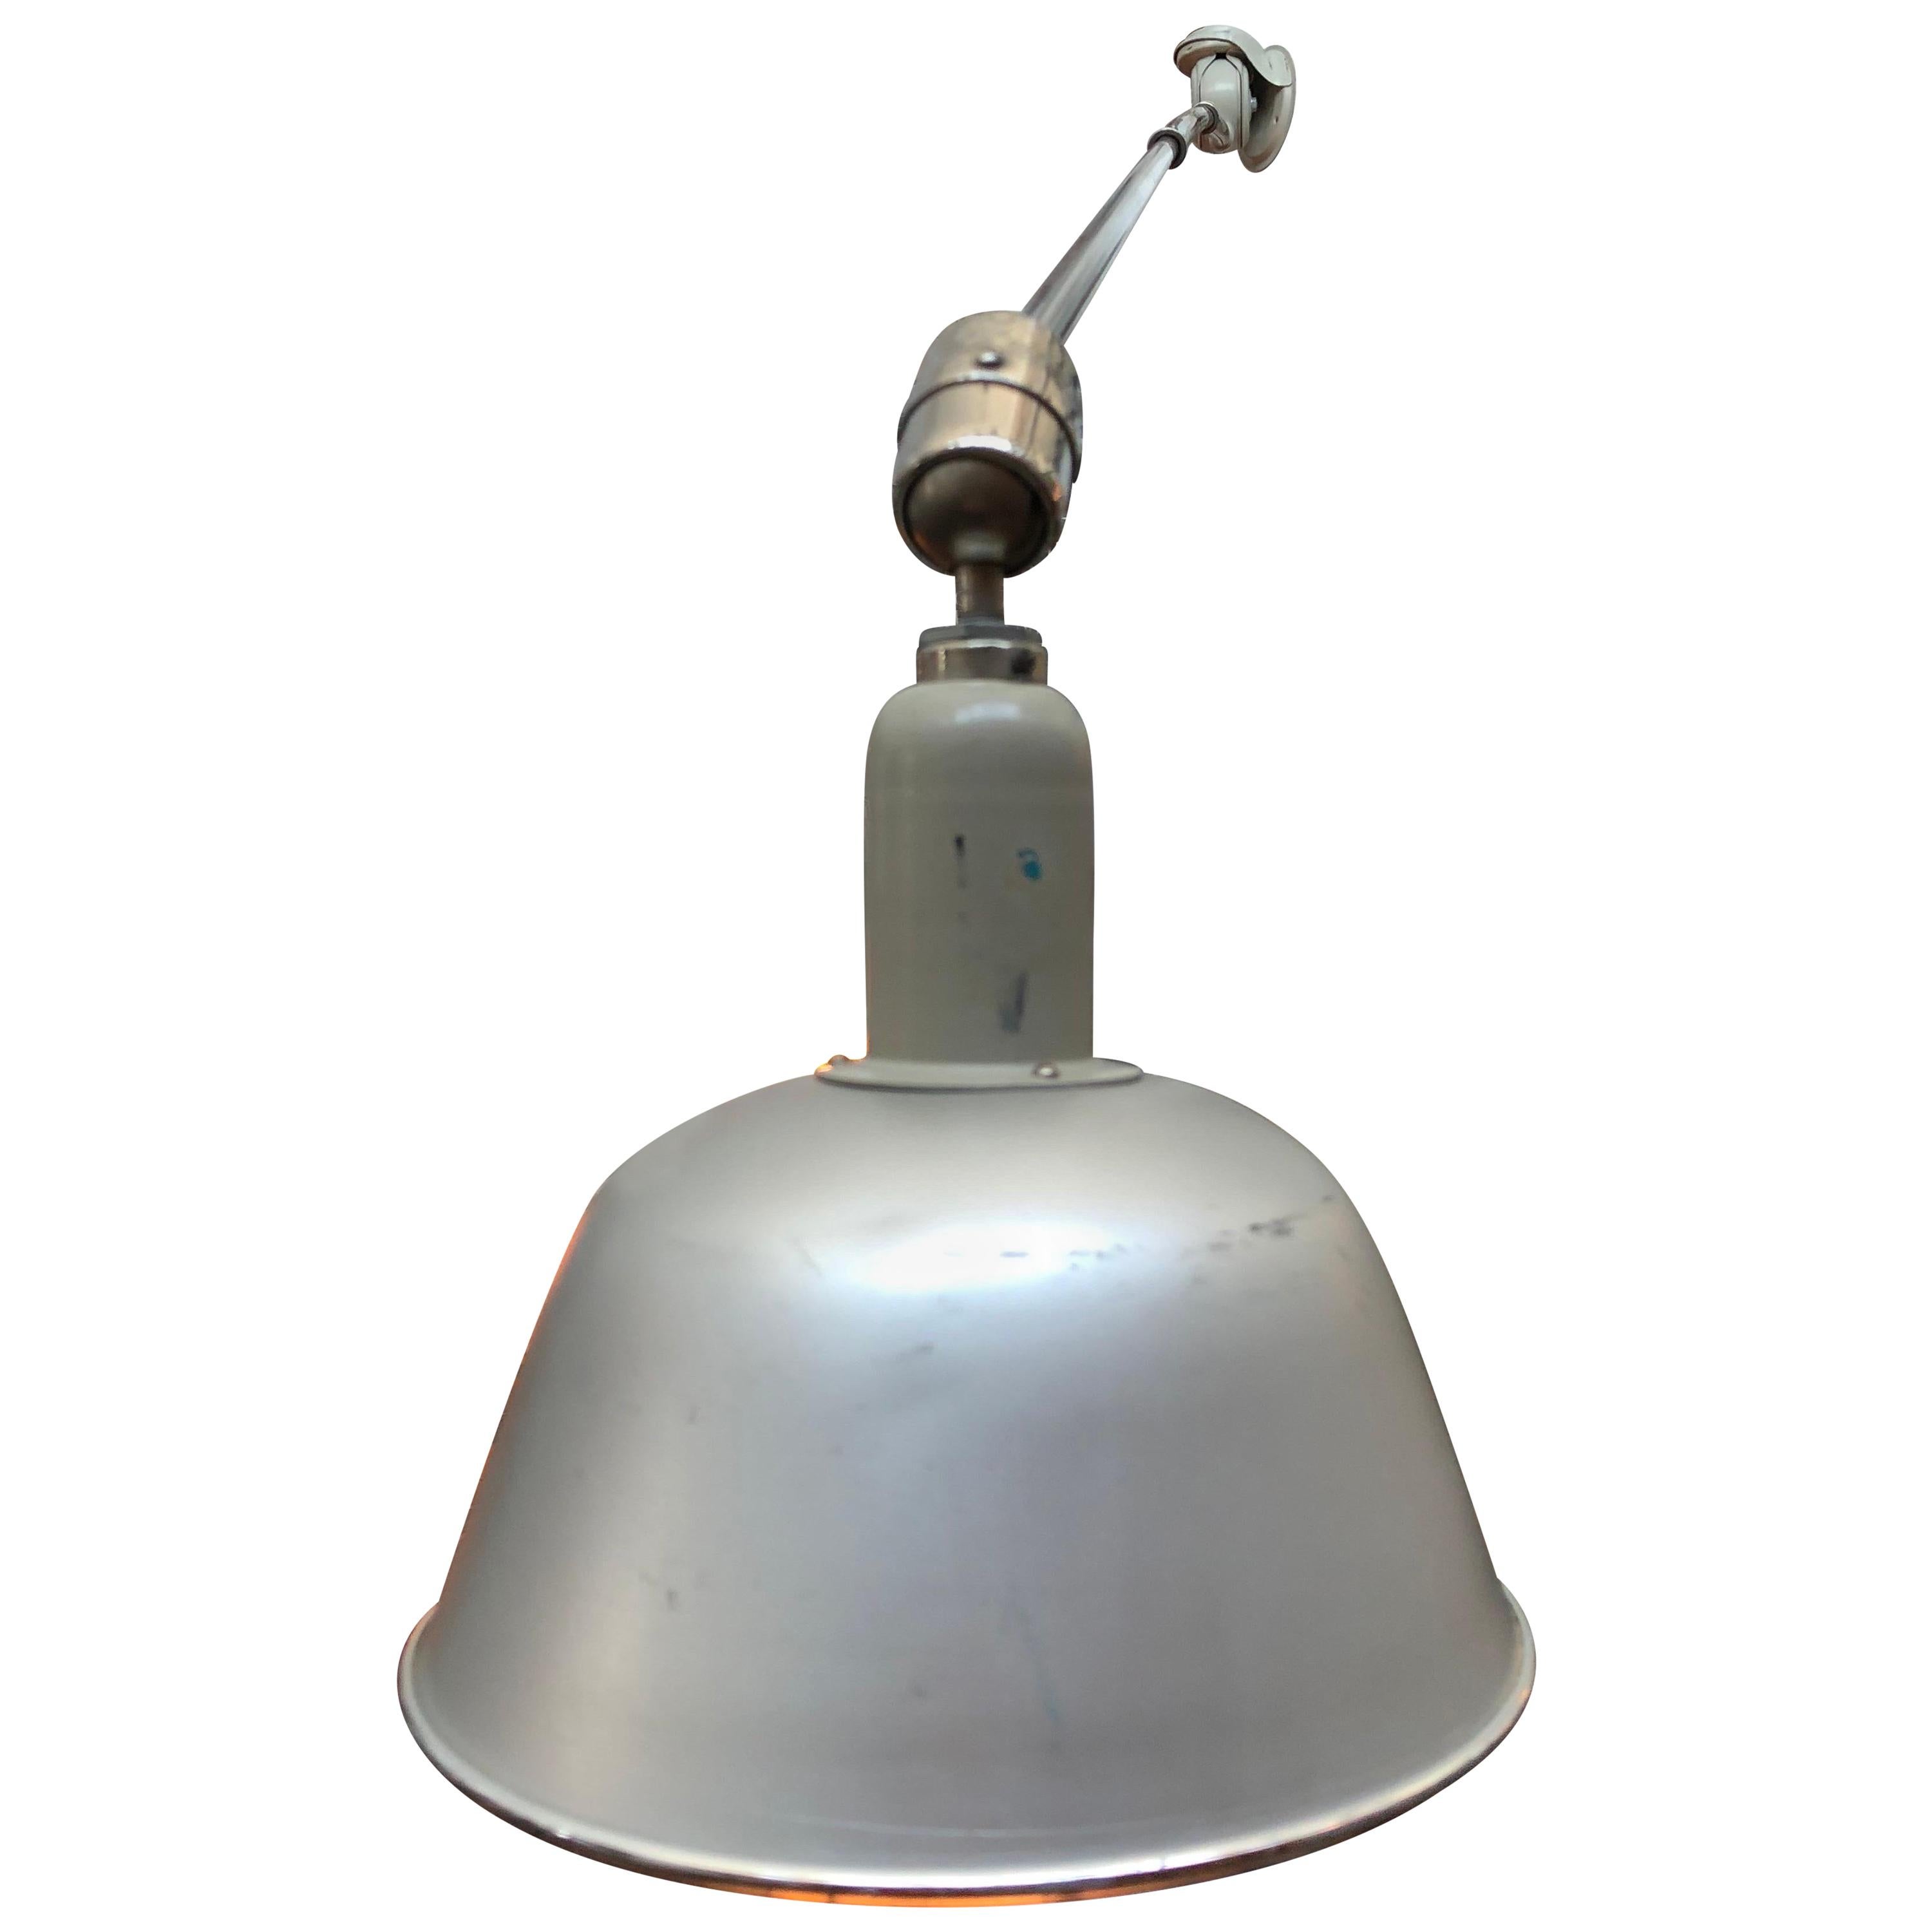 Classic Vintage Triplex Work Lamp by Johan Petter Johansson for ASEA of Sweden